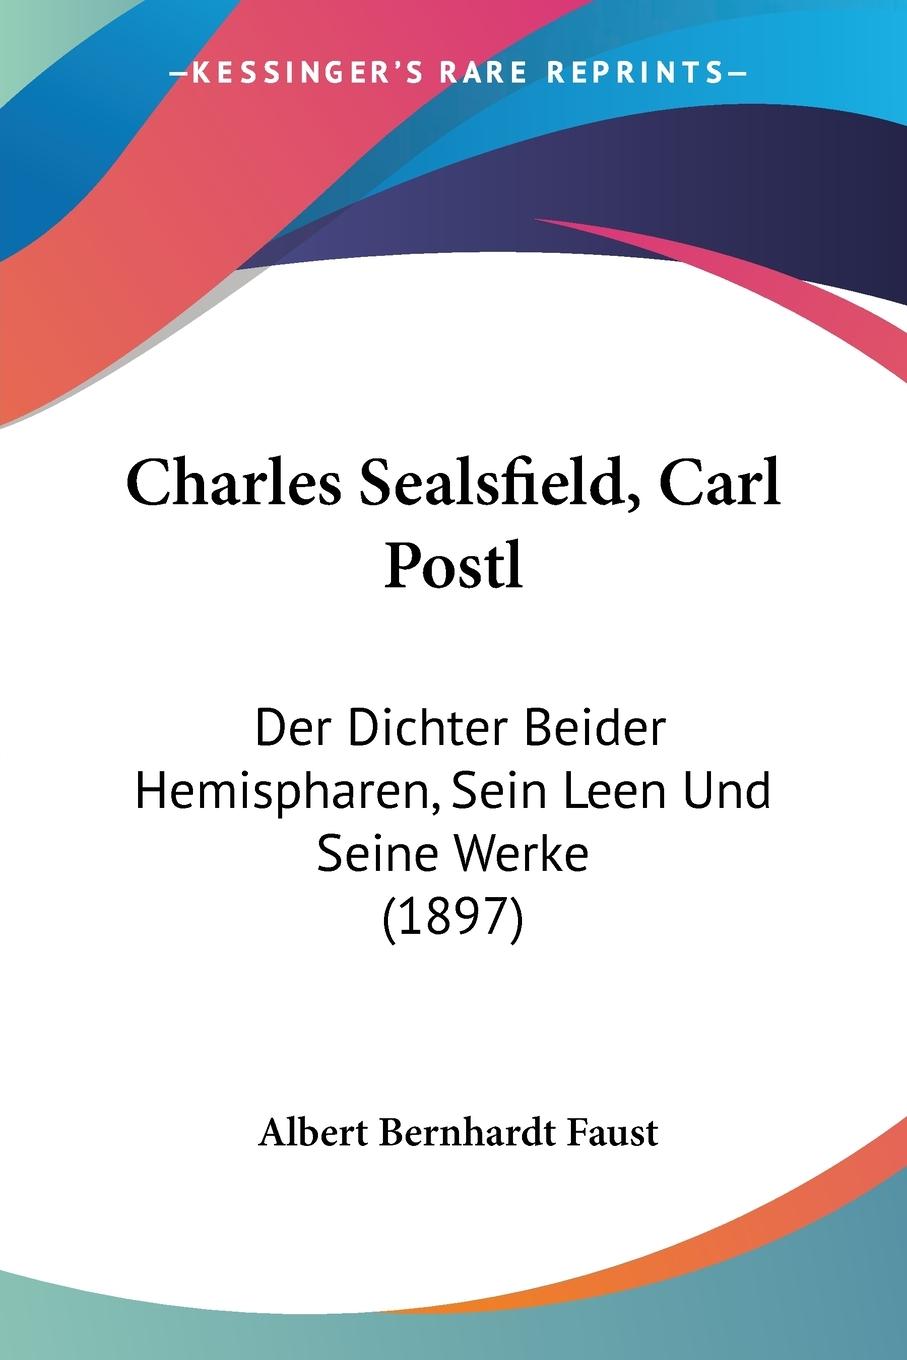 Charles Sealsfield, Carl Postl - Faust, Albert Bernhardt